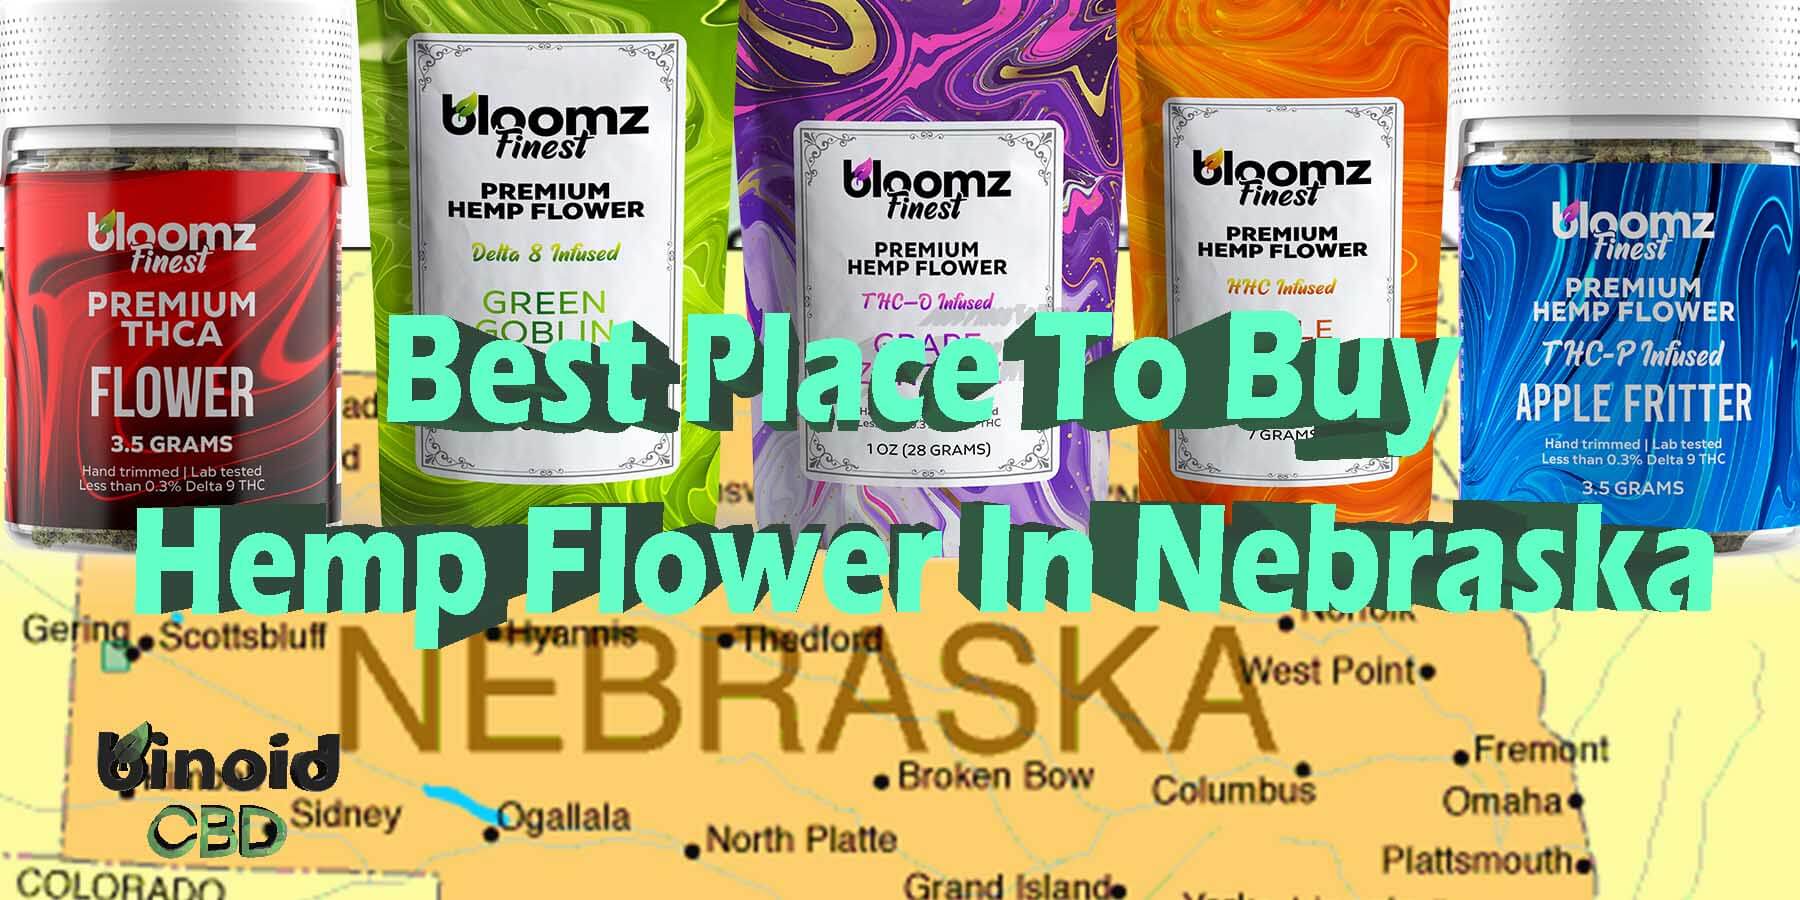 Buy Hemp Flower Nebraska Rolls Get Online Near Me For Sale Best Brand Strongest Real Legal Store Shop Reddit